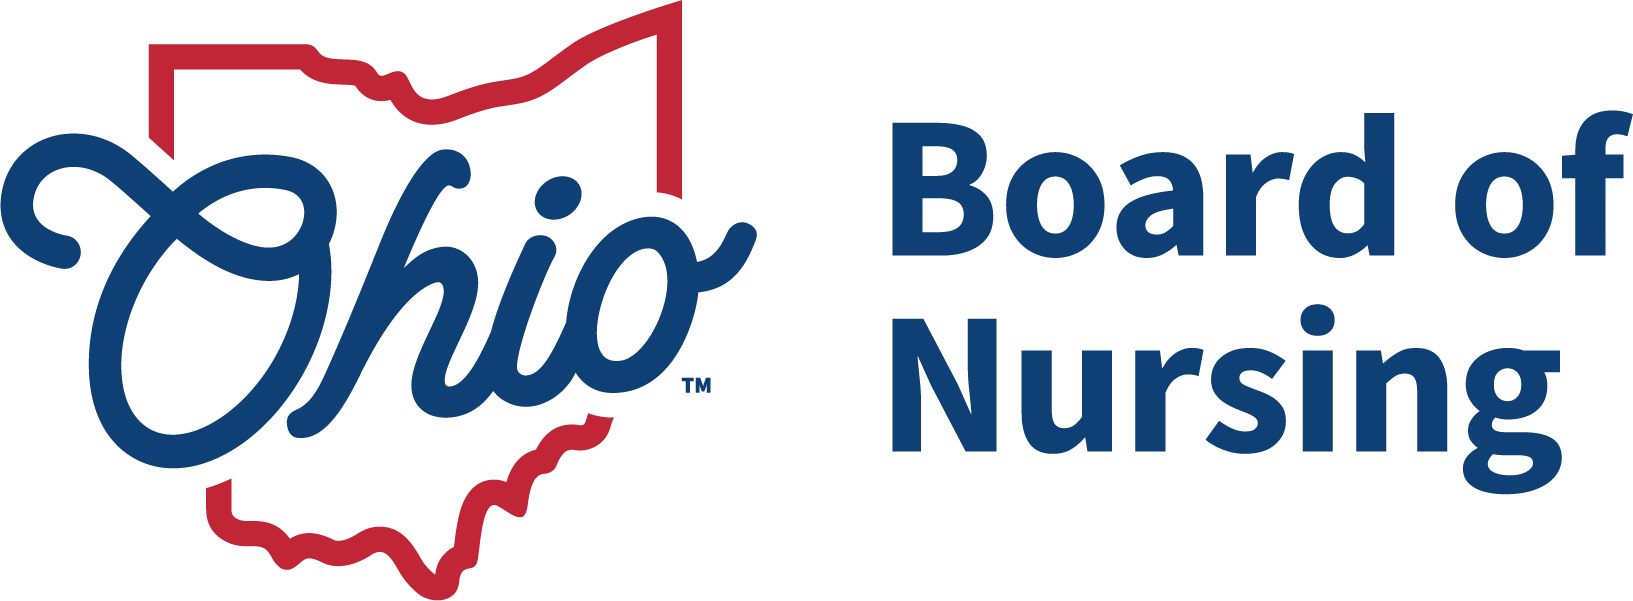 State of Ohio Board of Nursing logo